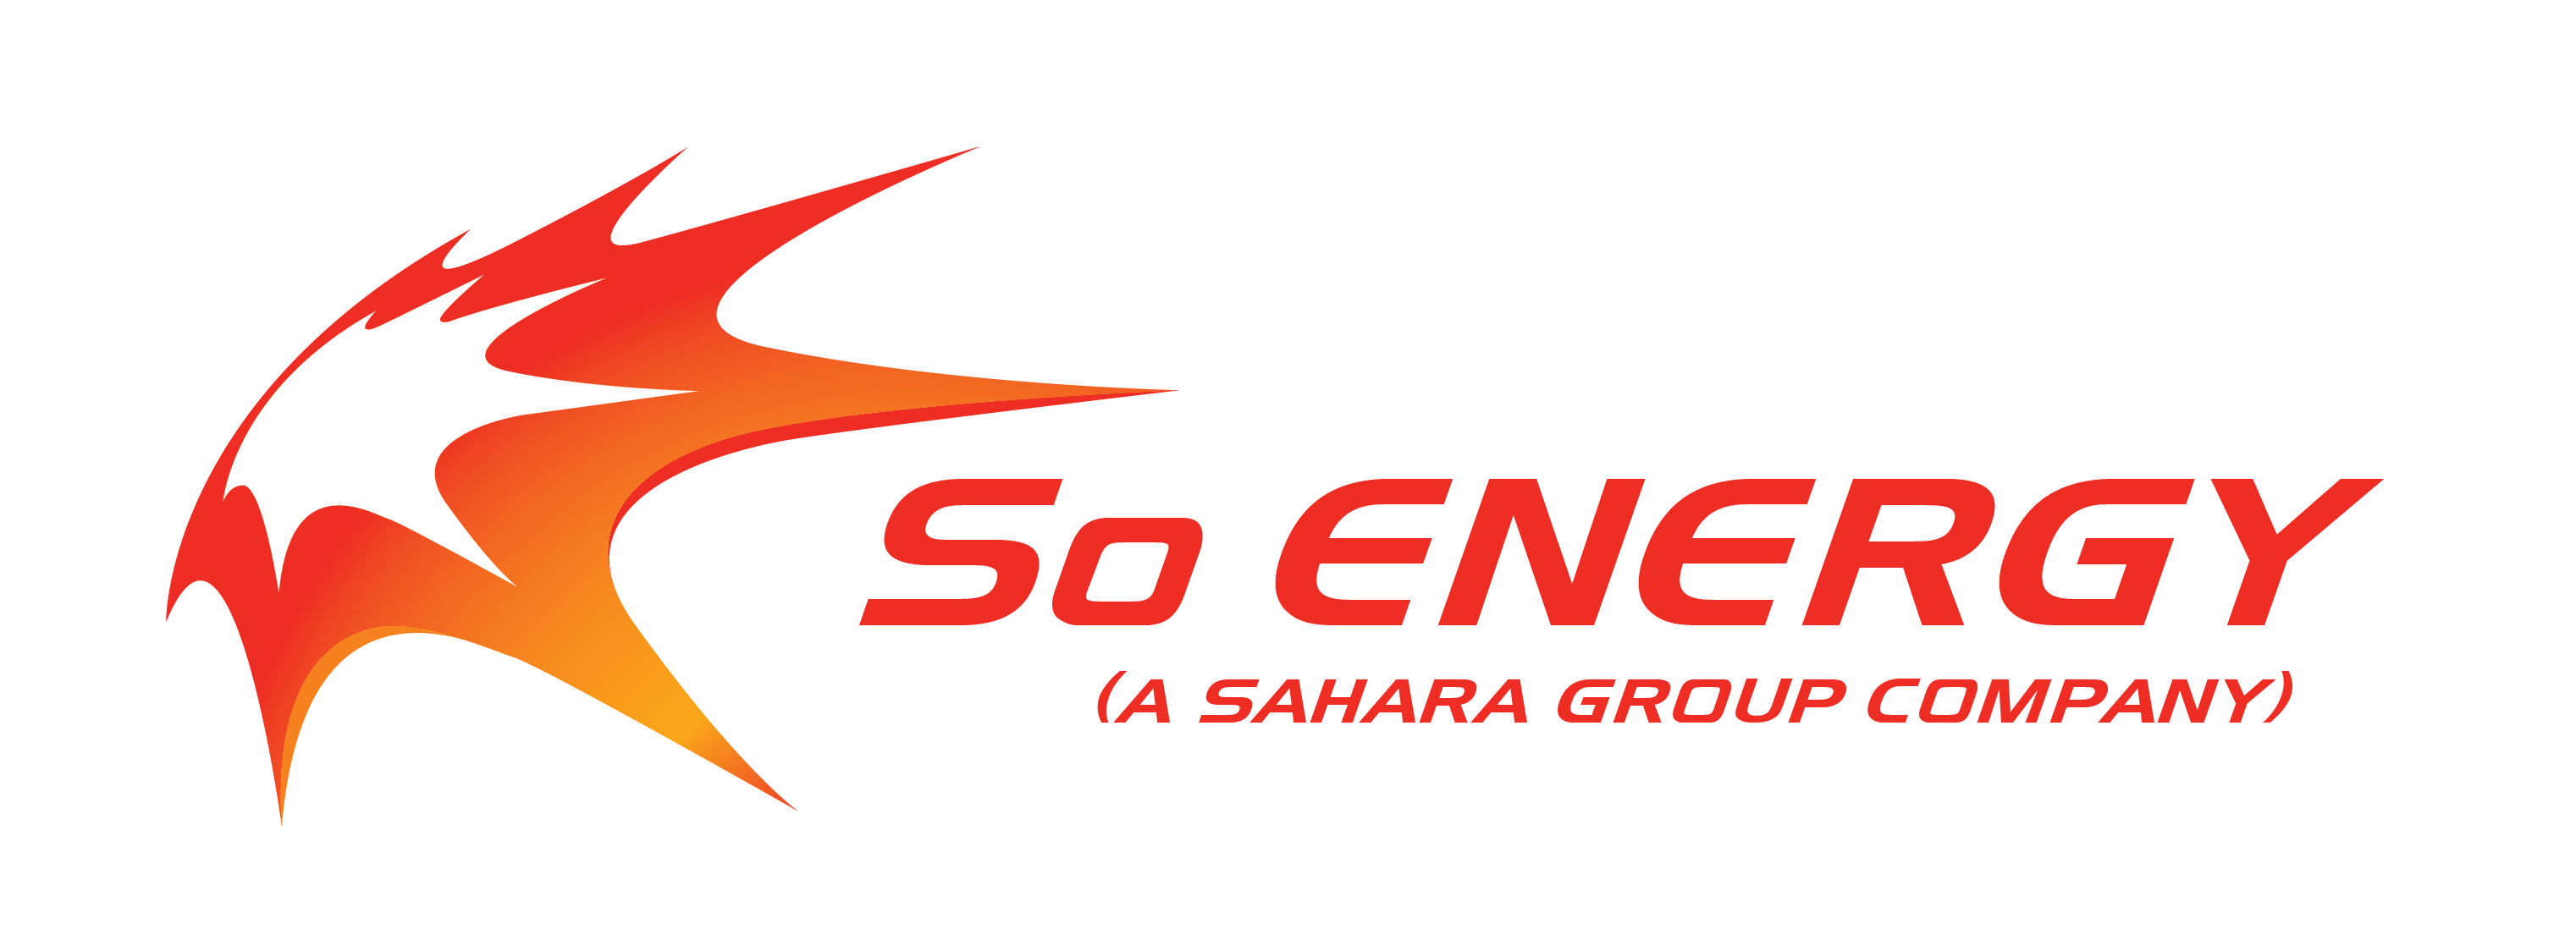 So Energy Ltd.